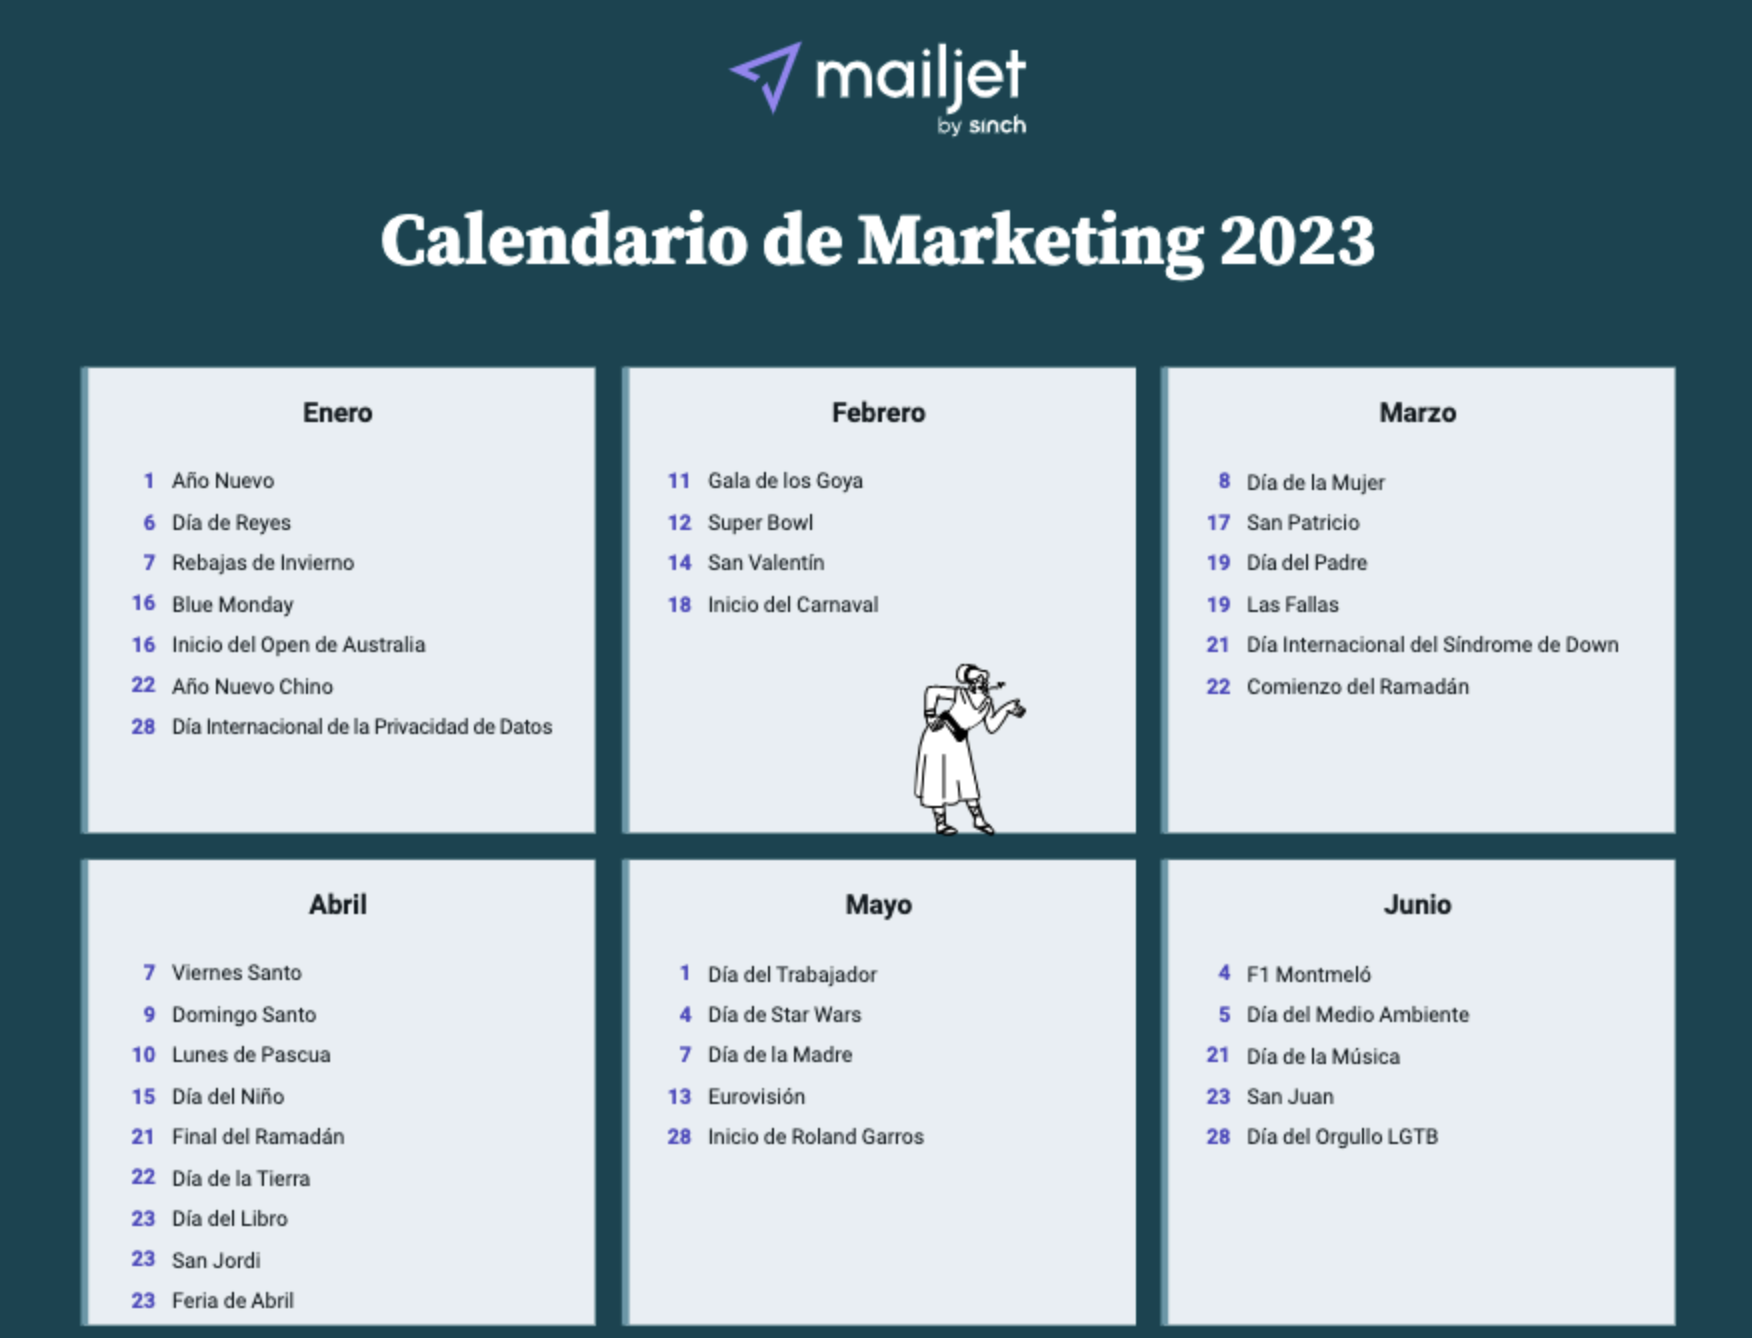 Calendario de marketing de 2023 con todas las fechas destacadas para este año.